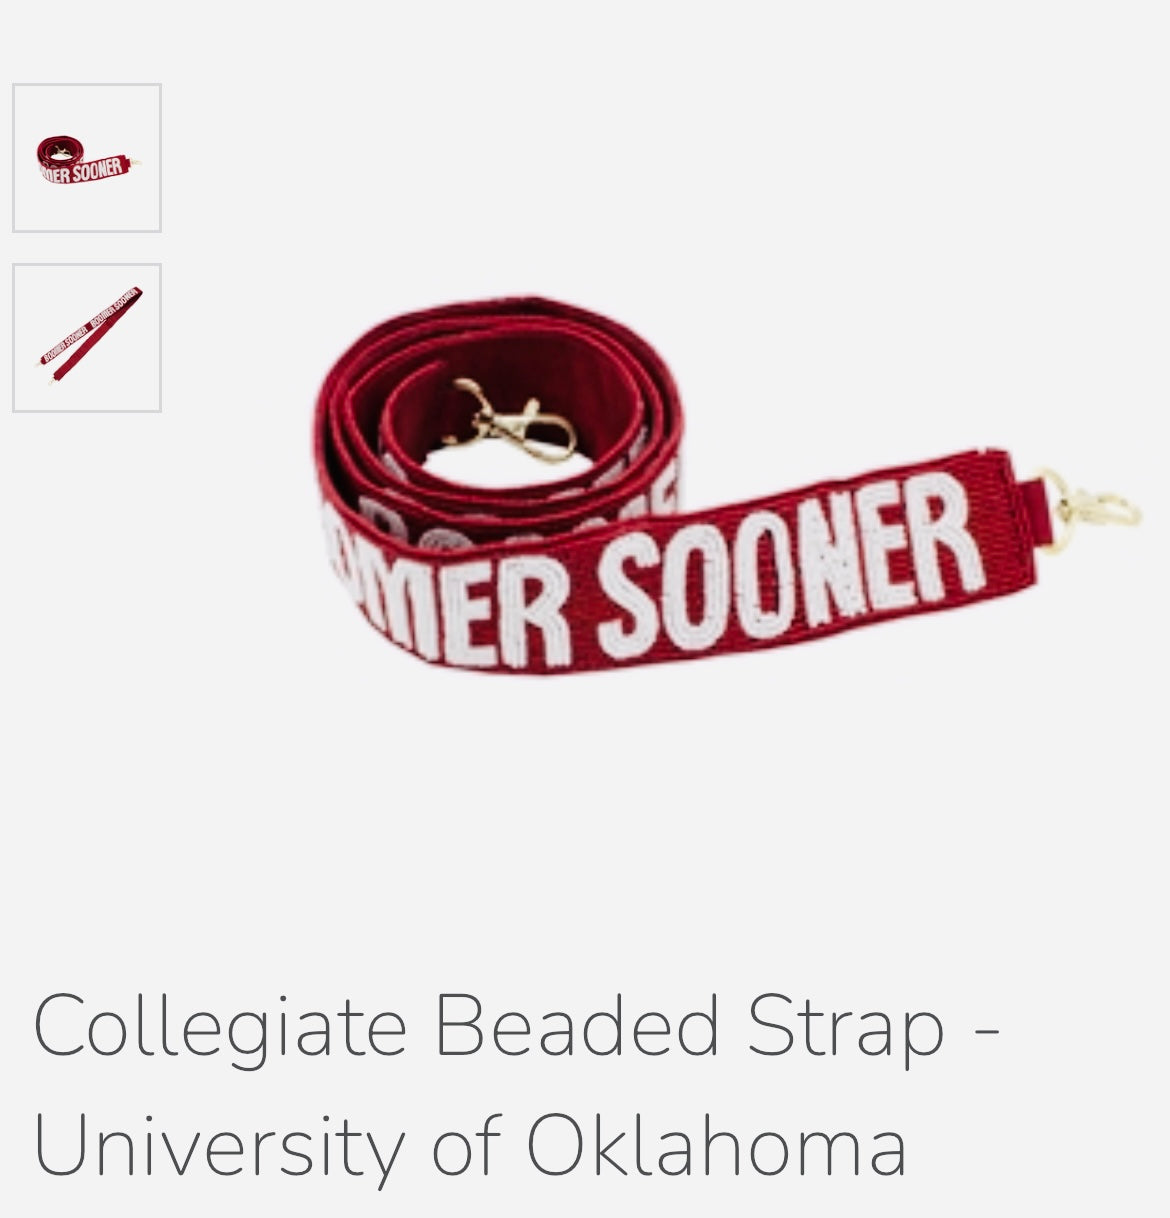 University of Oklahoma Collegiate Beaded Strap